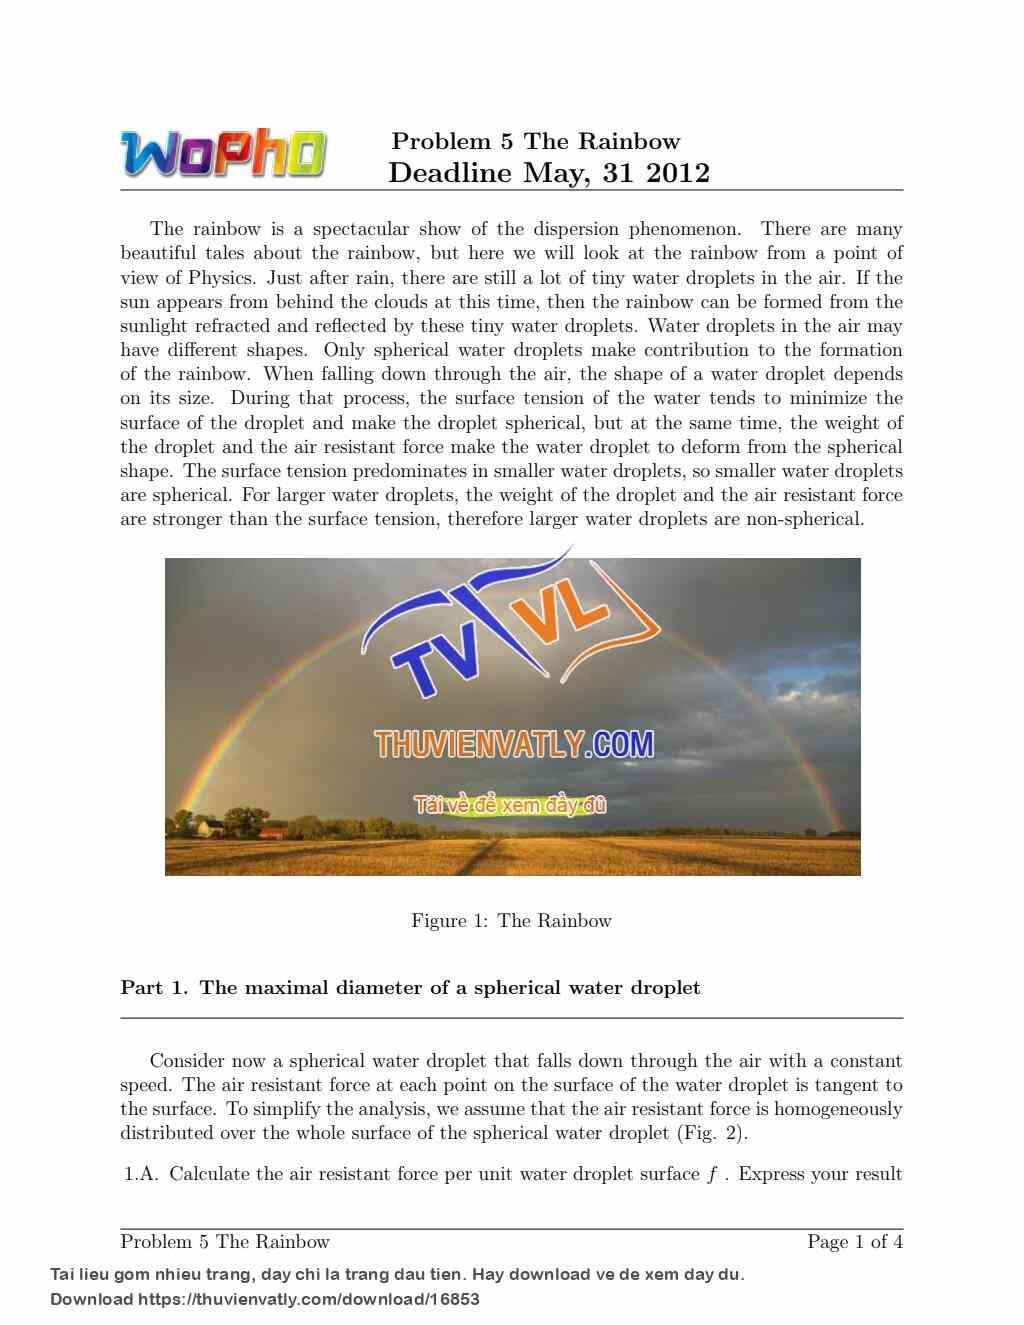 WophO: Problem 5 The Rainbow (Hiện tượng cầu vồng)Deadline May, 31 2012